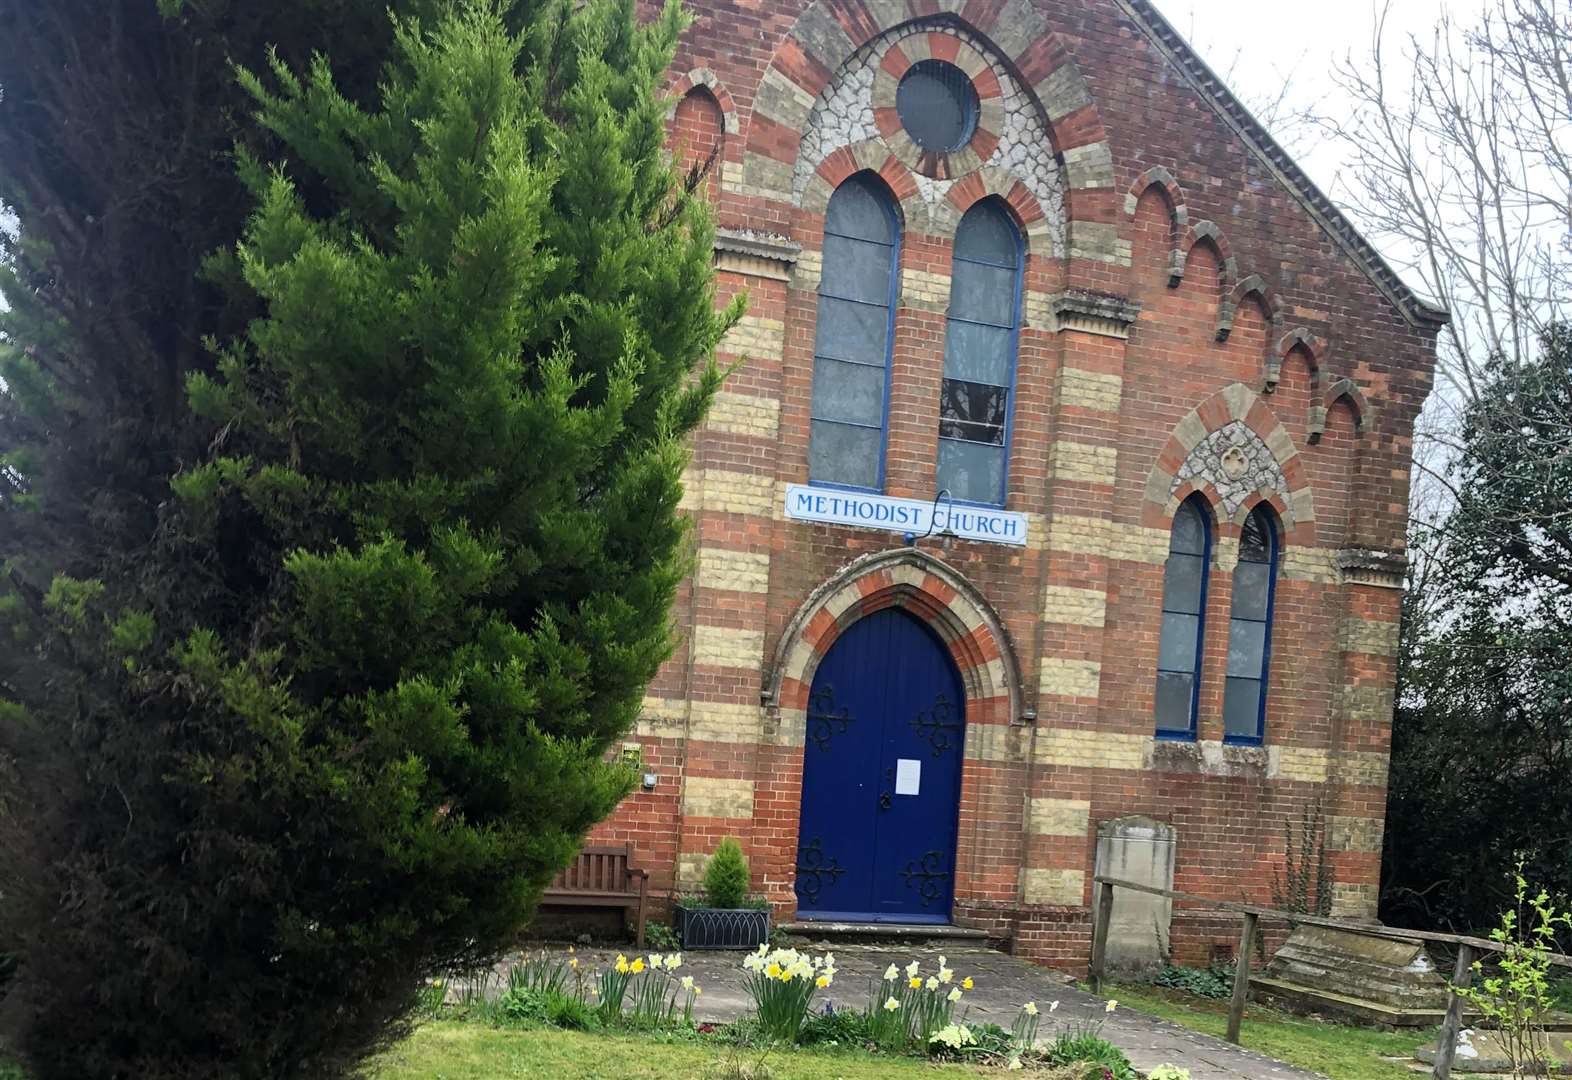 Village church given community asset listing 